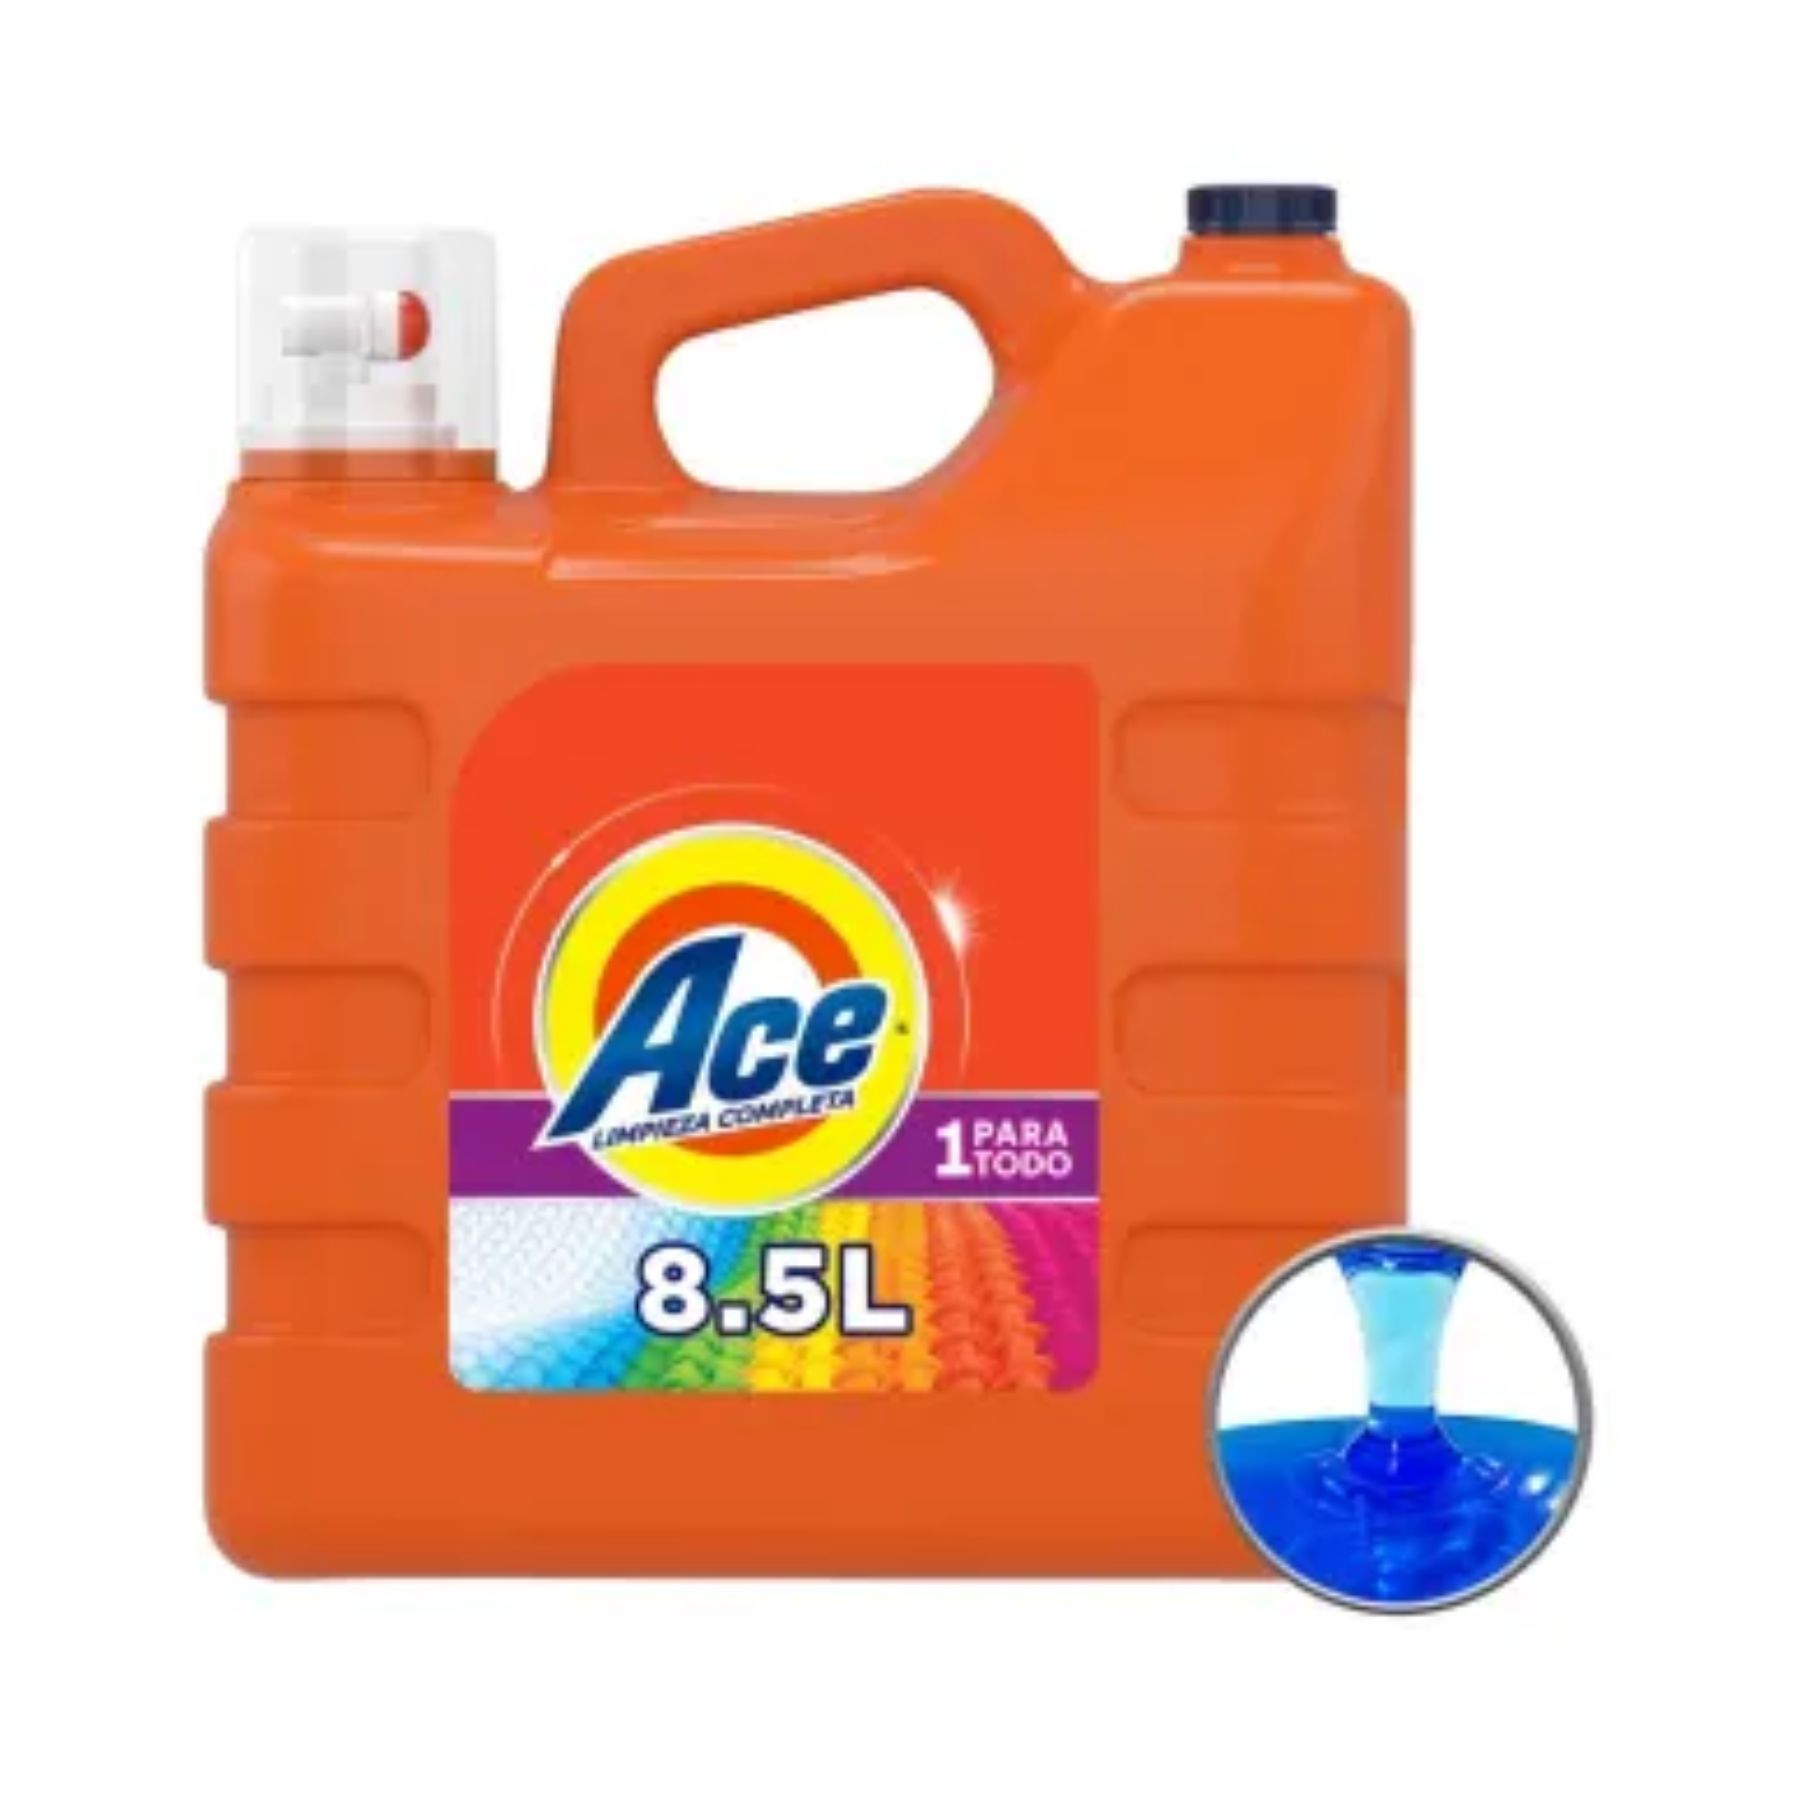 Detergente Líquido Limpieza Completa 8.5L Ace - NARANJA